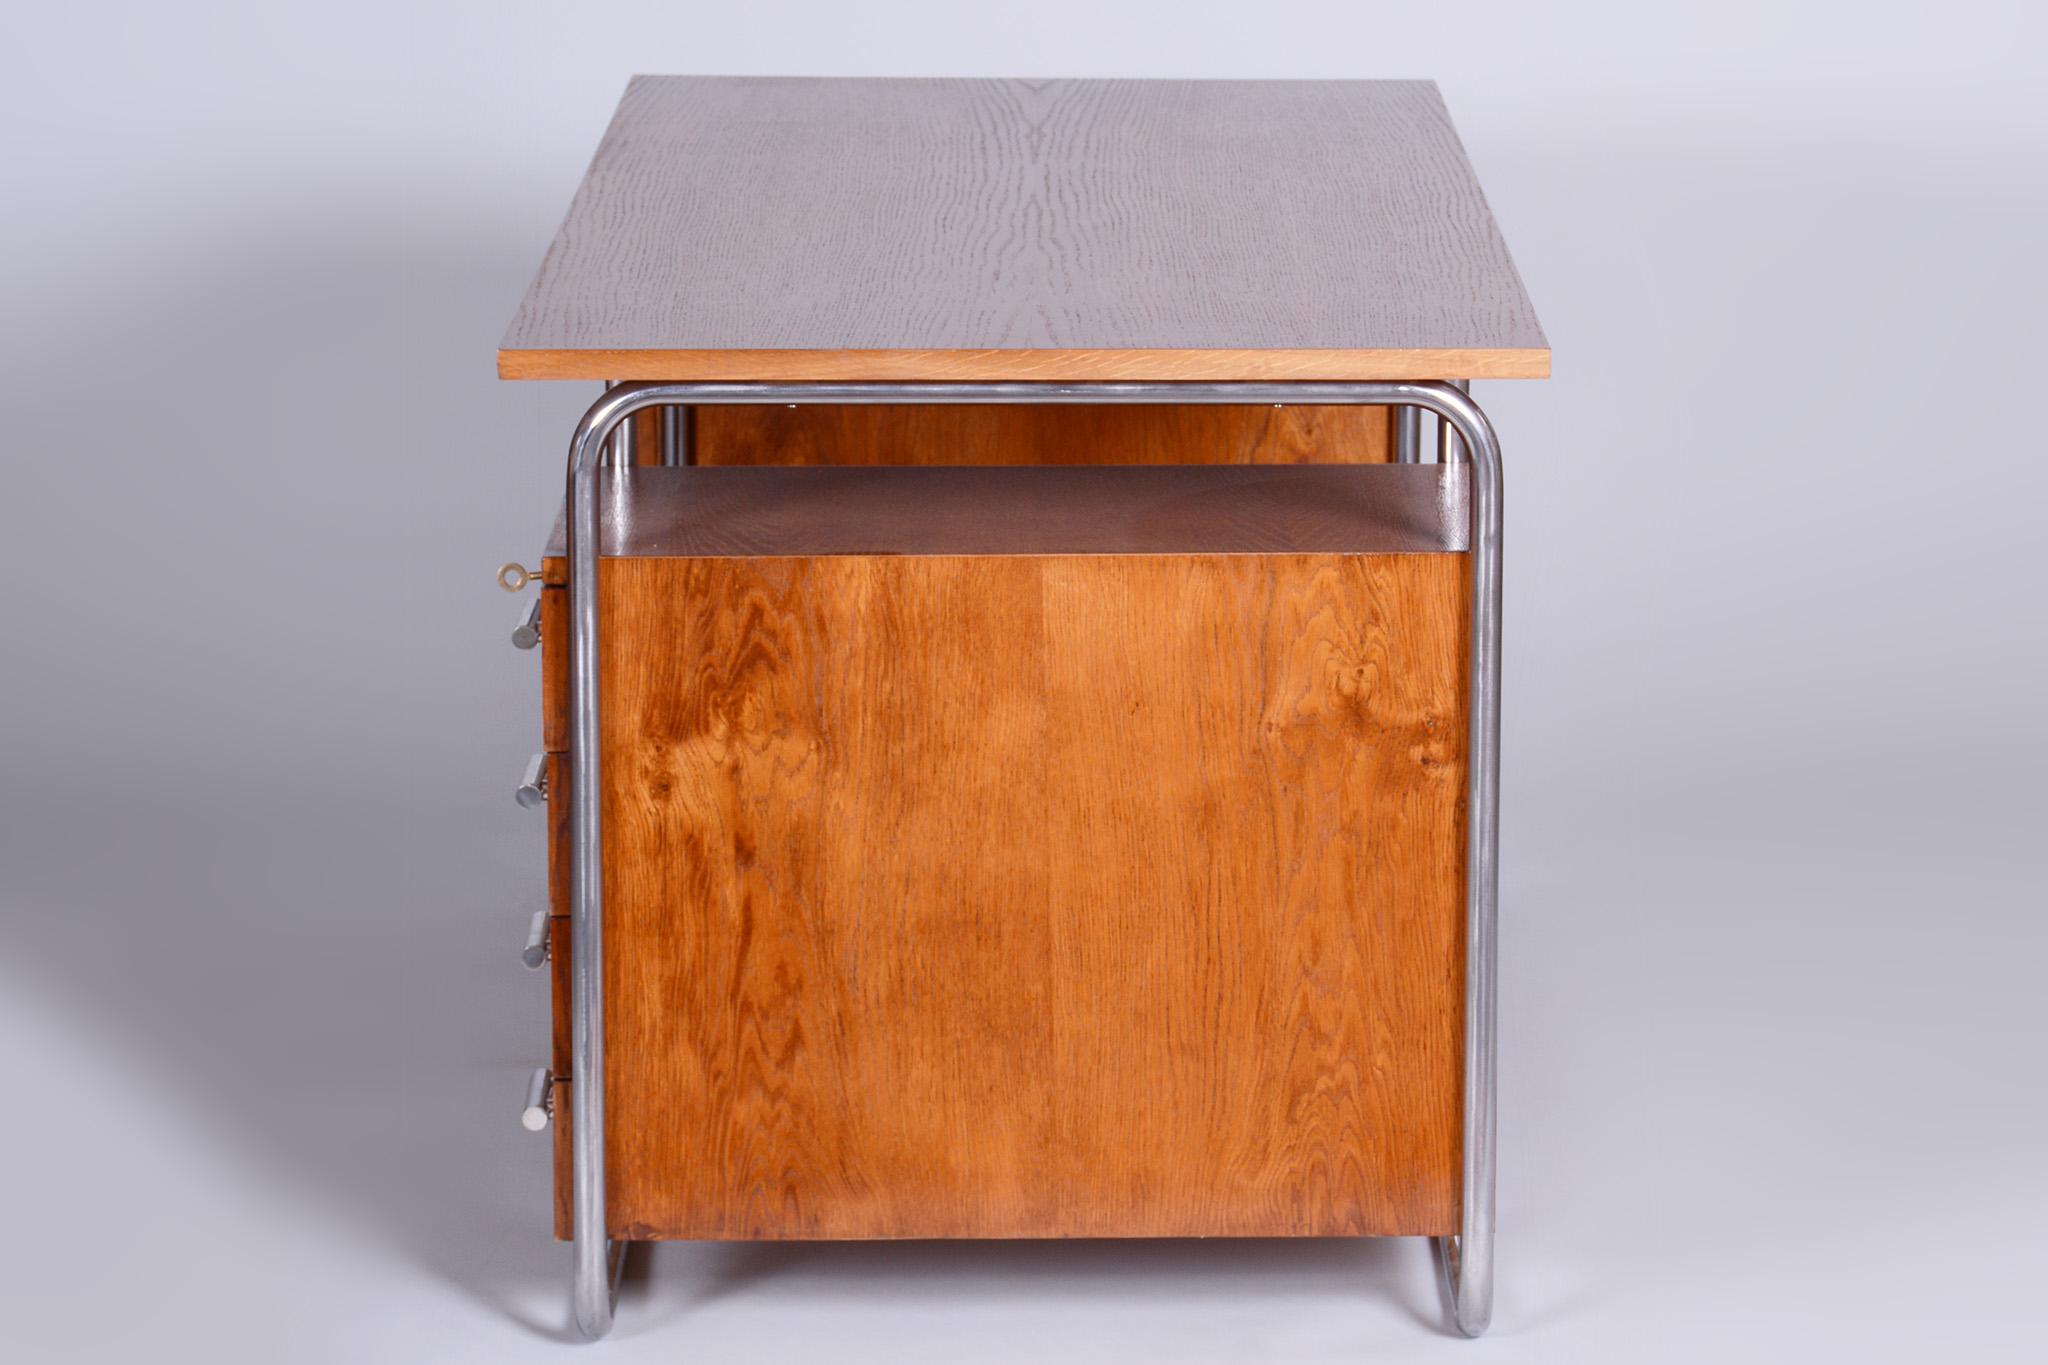 Chrome Bauhaus Restored Beech Writing Desk Made in 1930s by Robert Slezak, Czechia For Sale